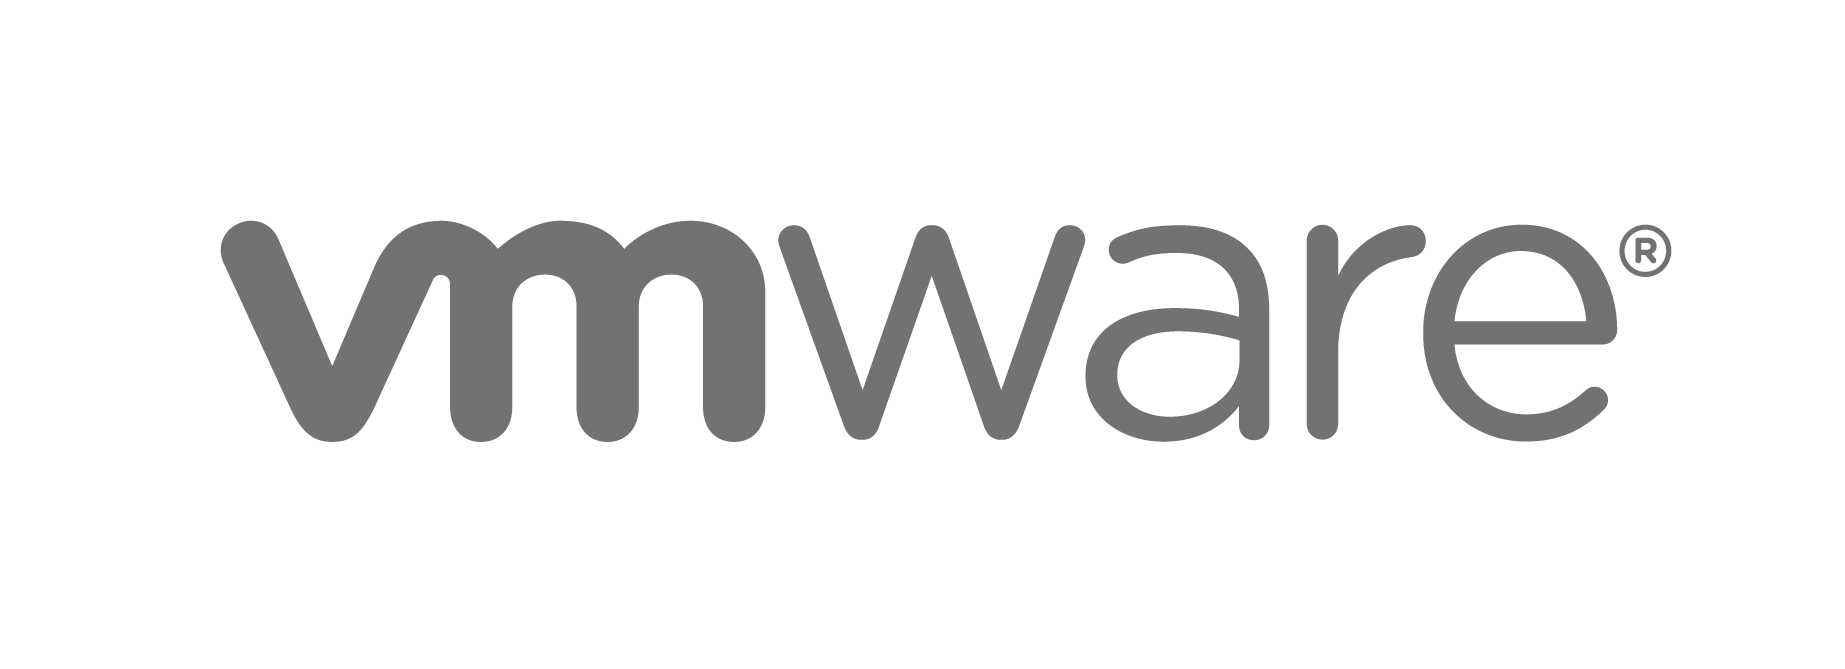 vmw-logo-vmware-logo-grey-300.png